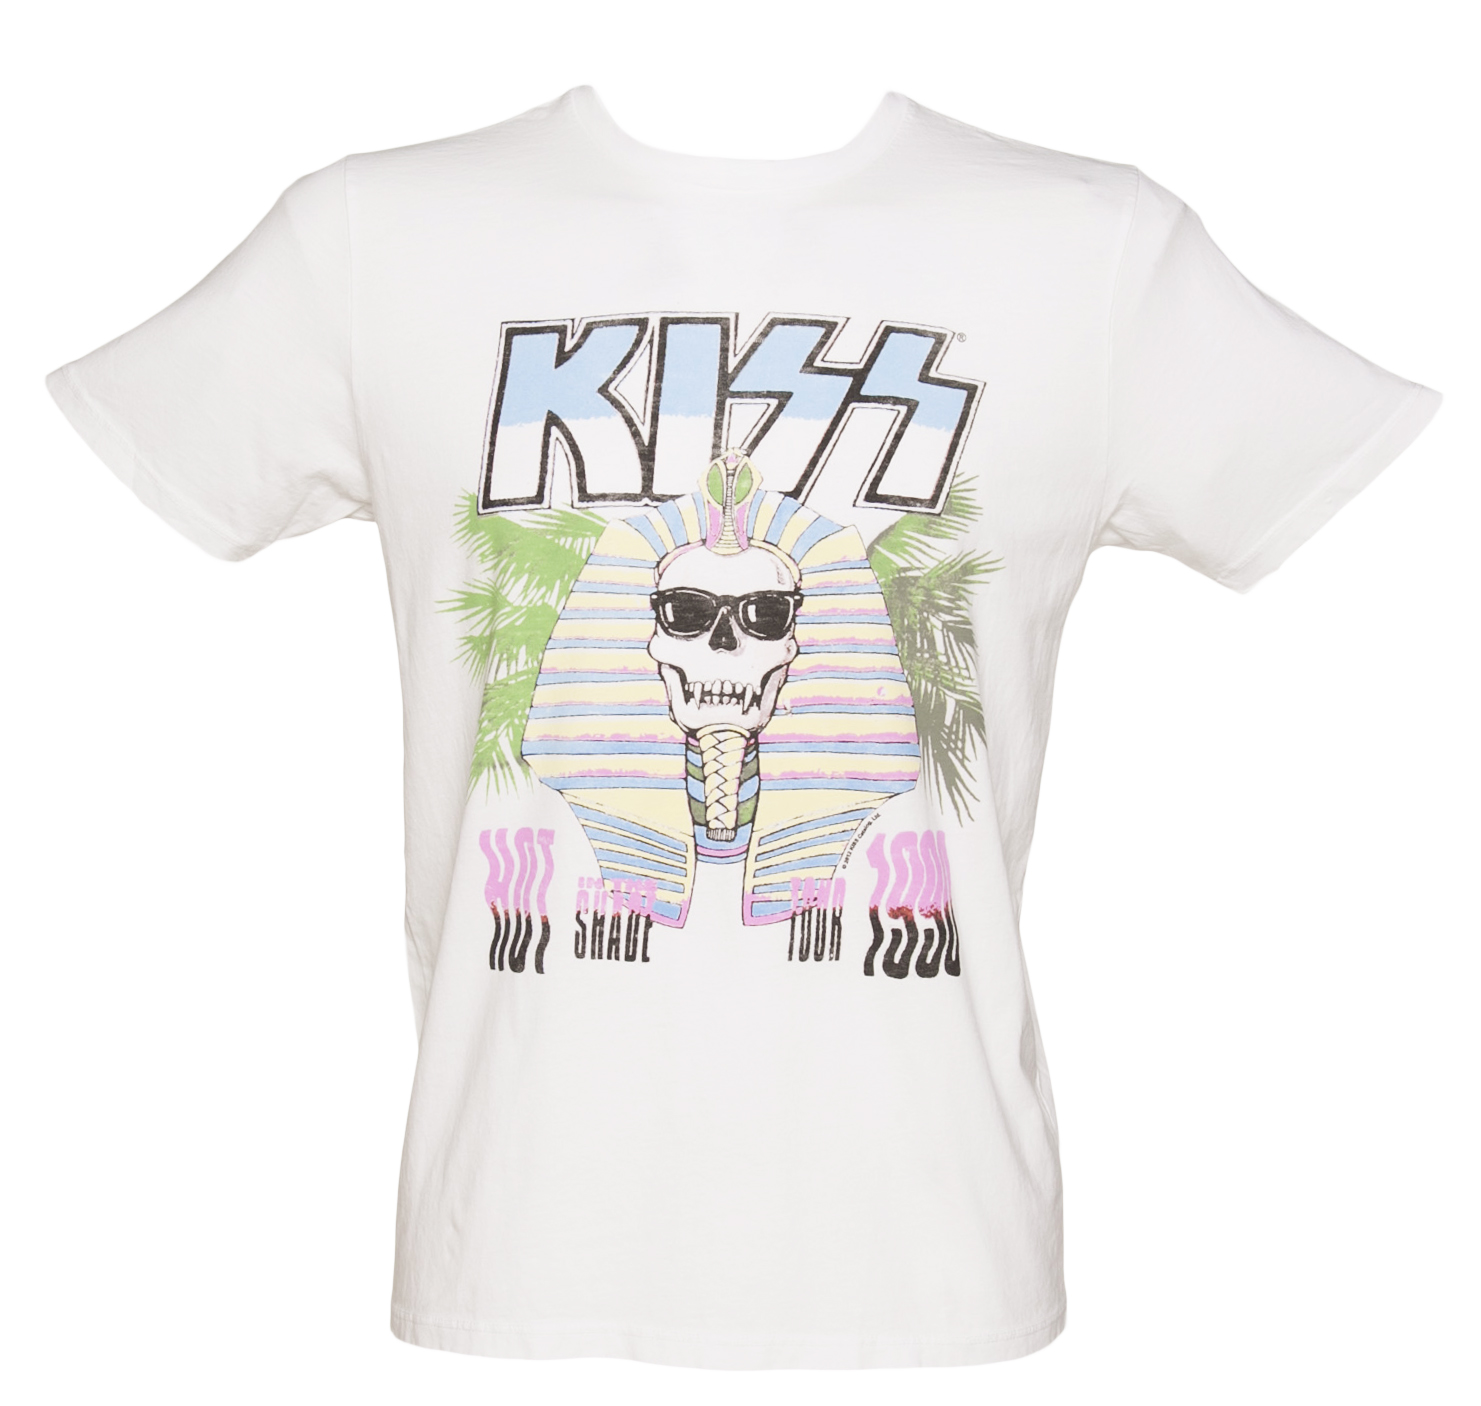 Mens White 1980 KISS Tour T-Shirt from Junk